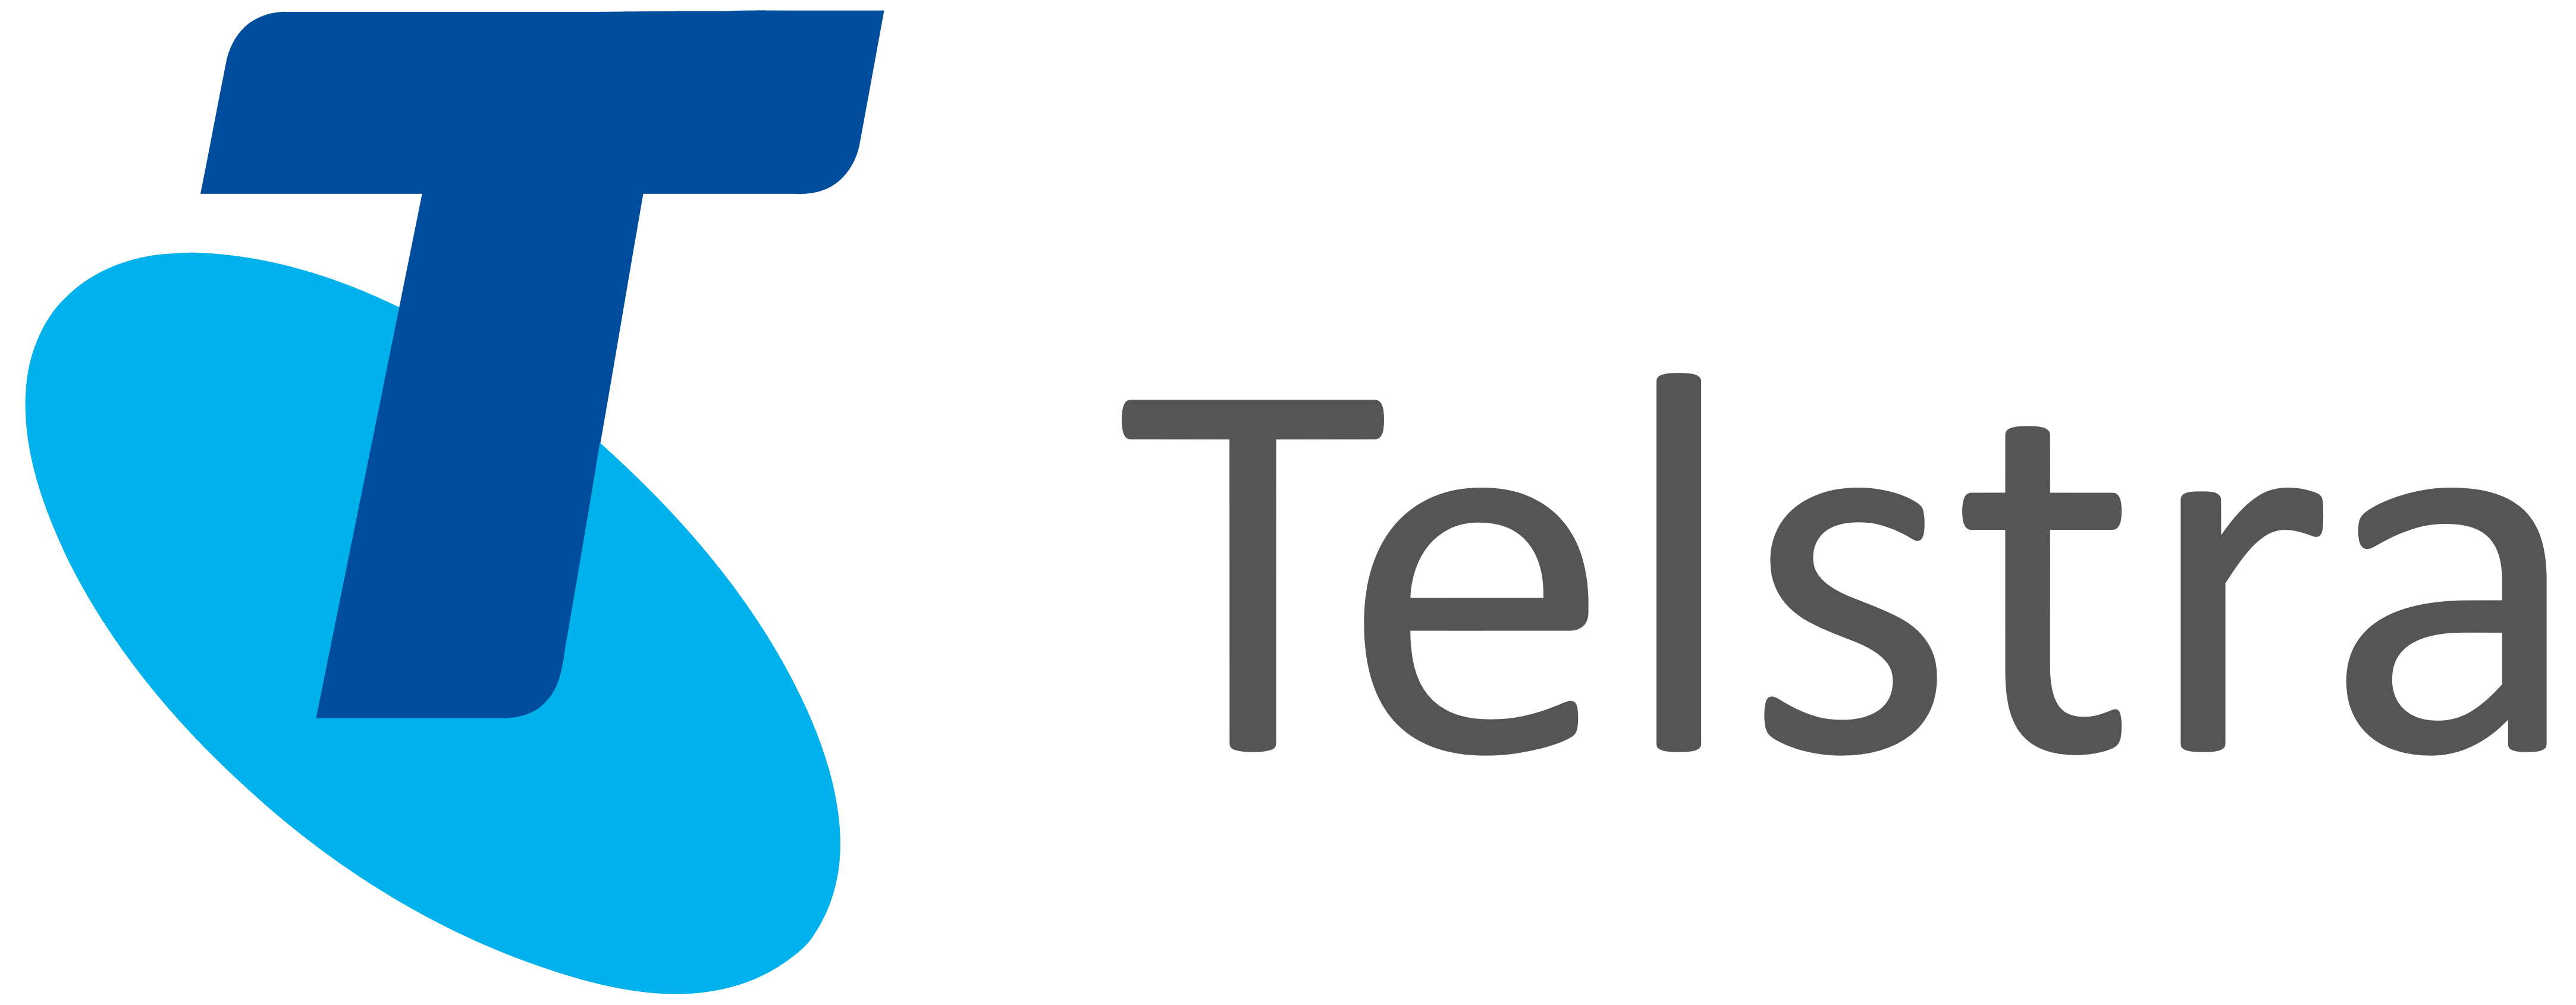 Telstra Corporation